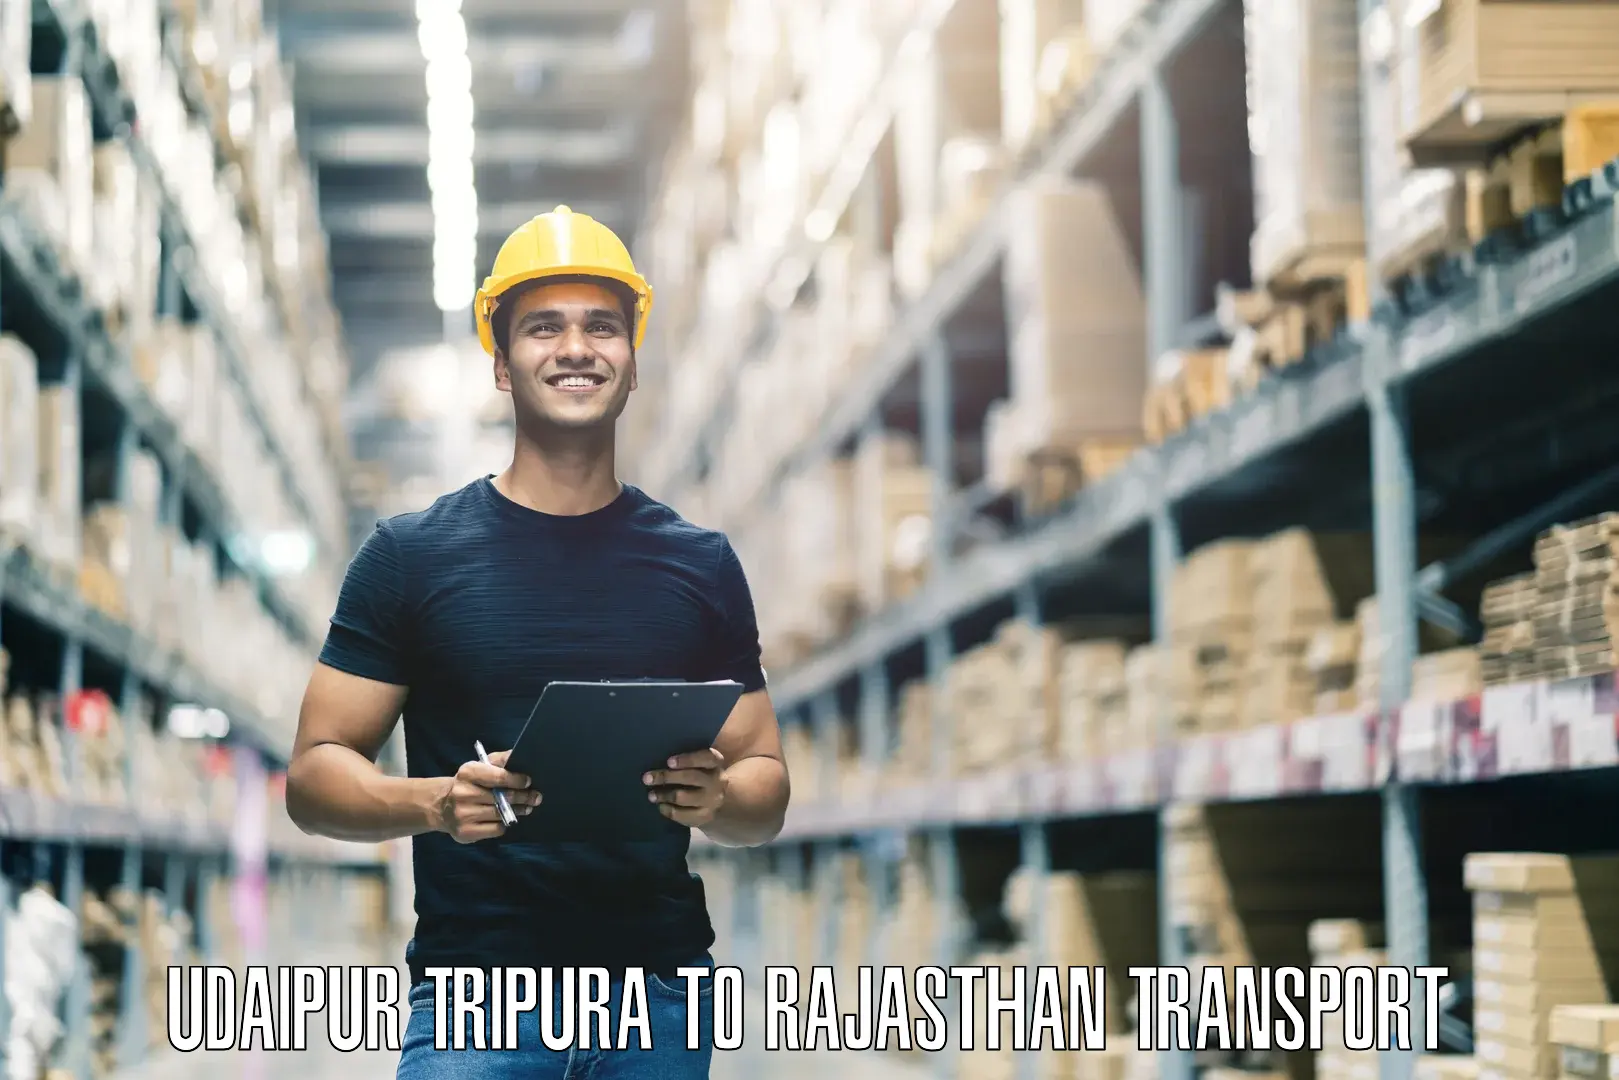 Container transport service Udaipur Tripura to Raila